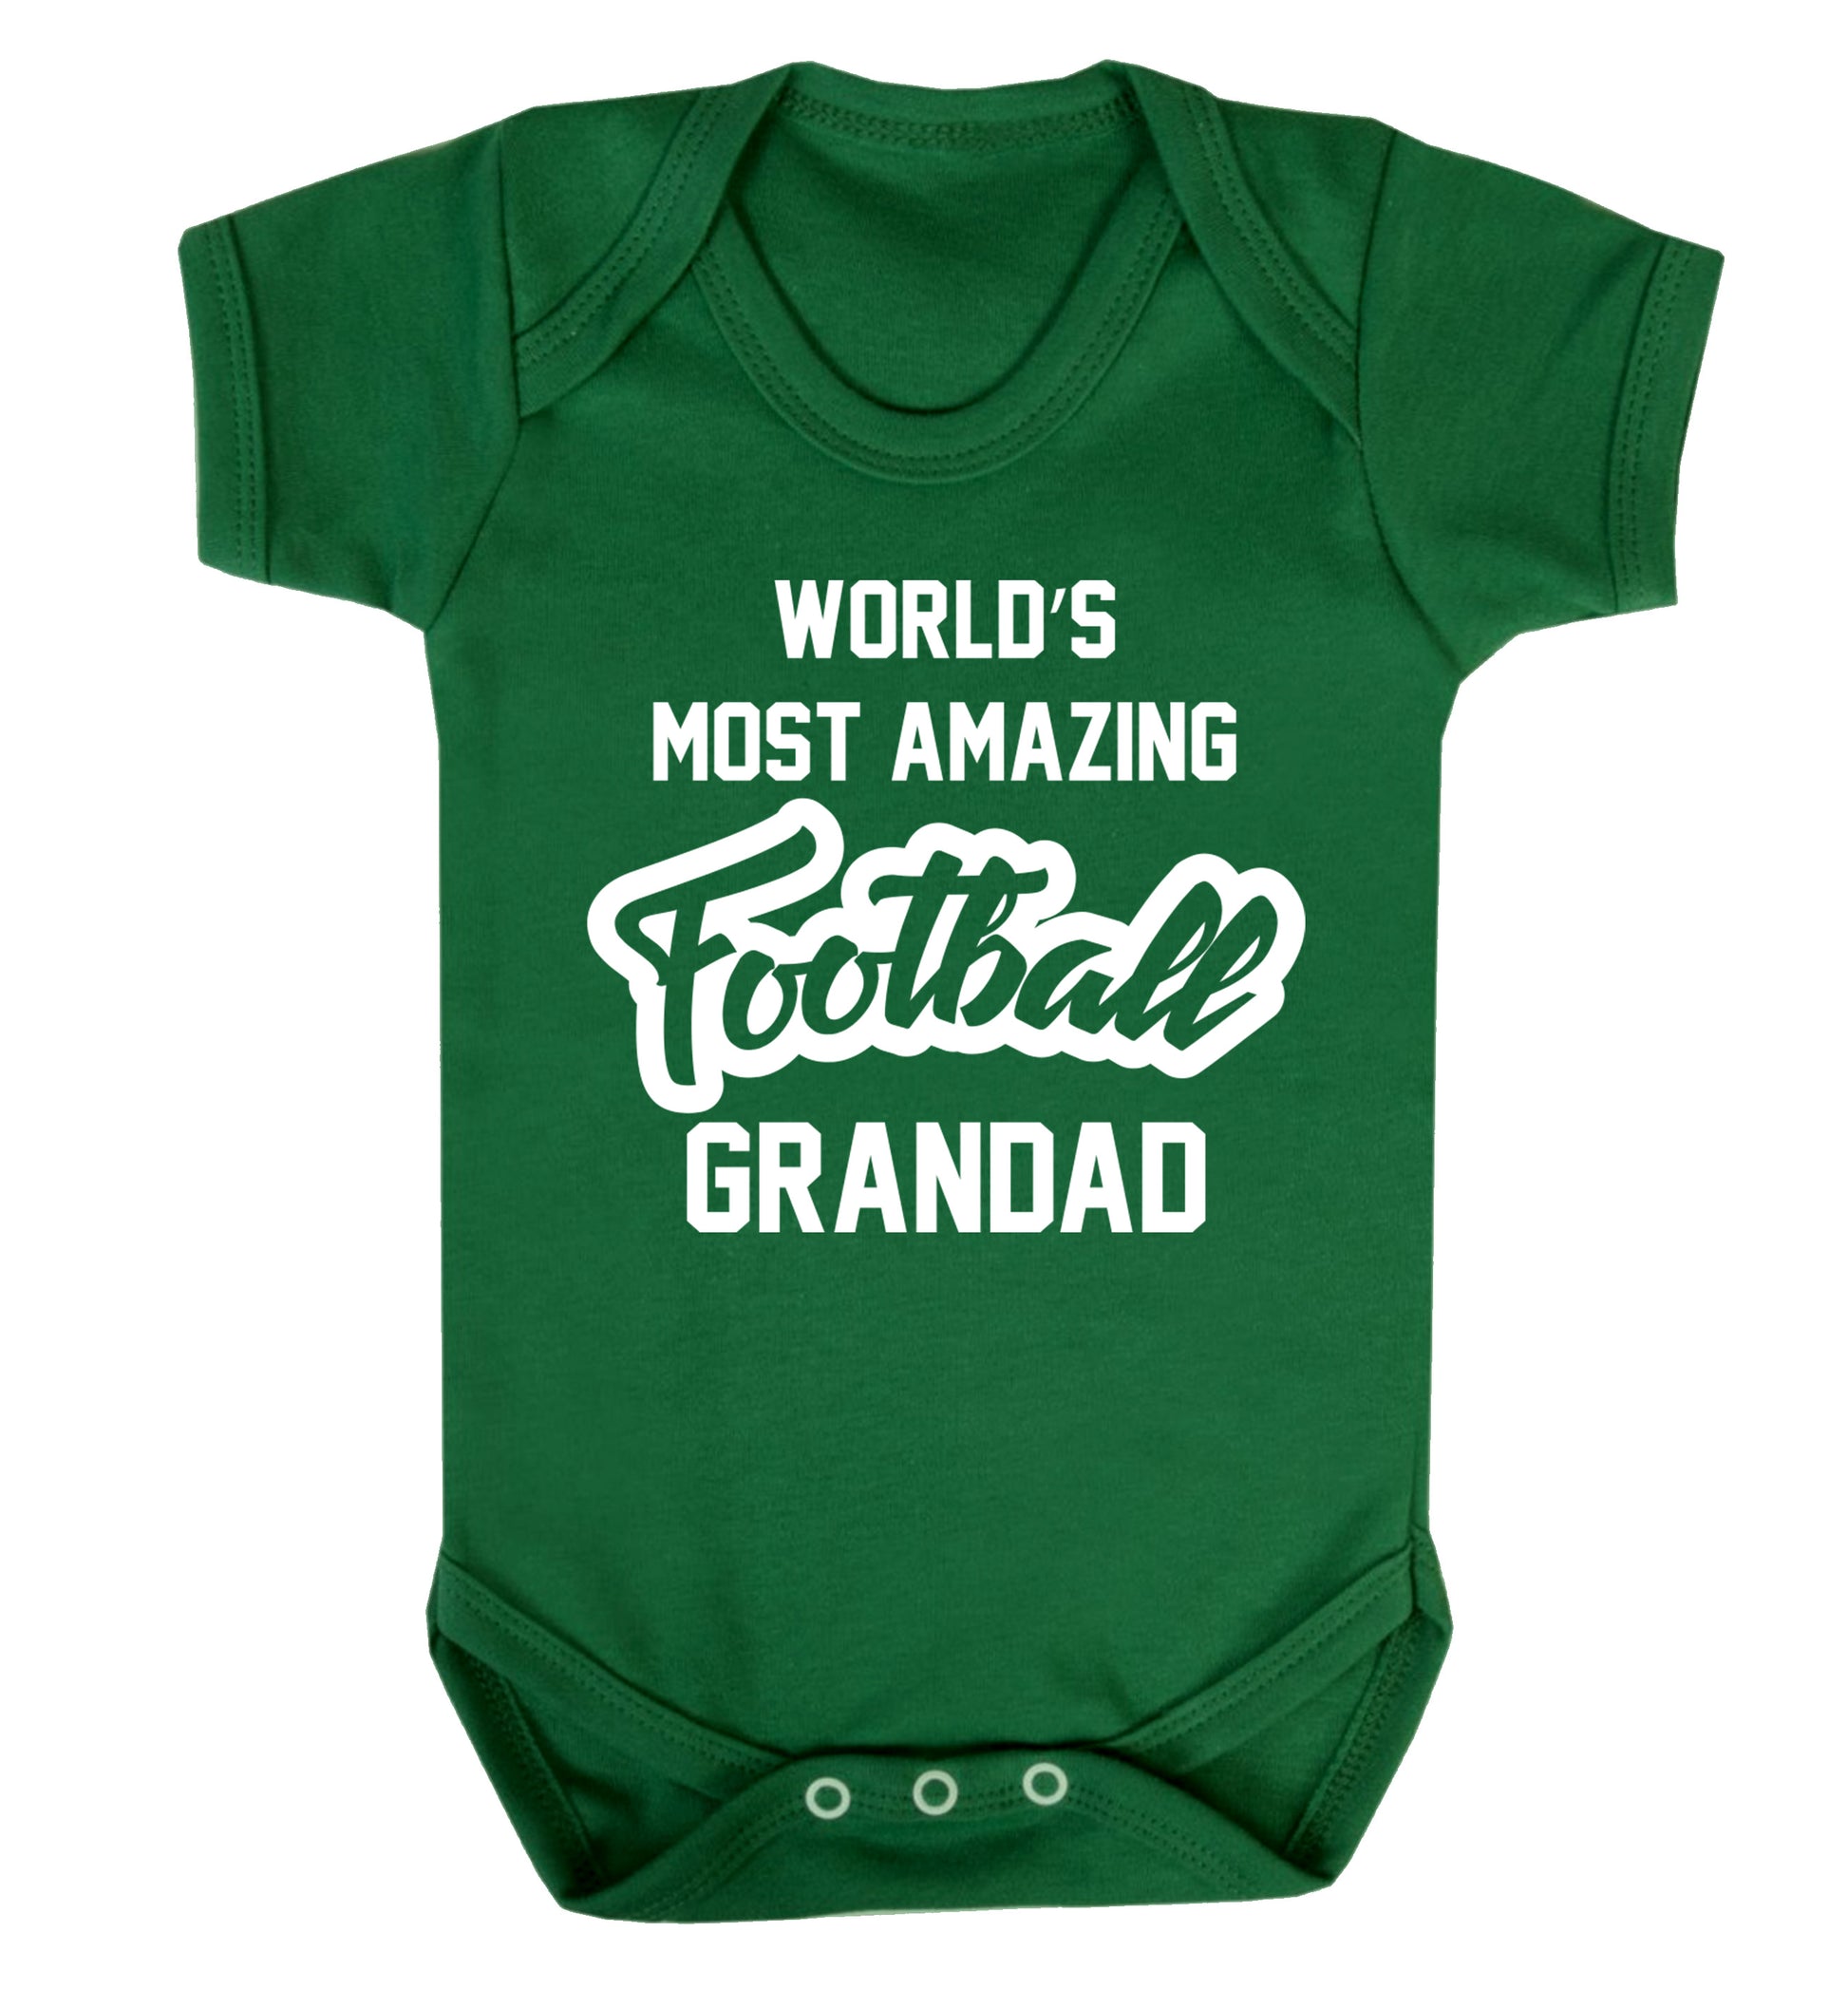 Worlds most amazing football grandad Baby Vest green 18-24 months